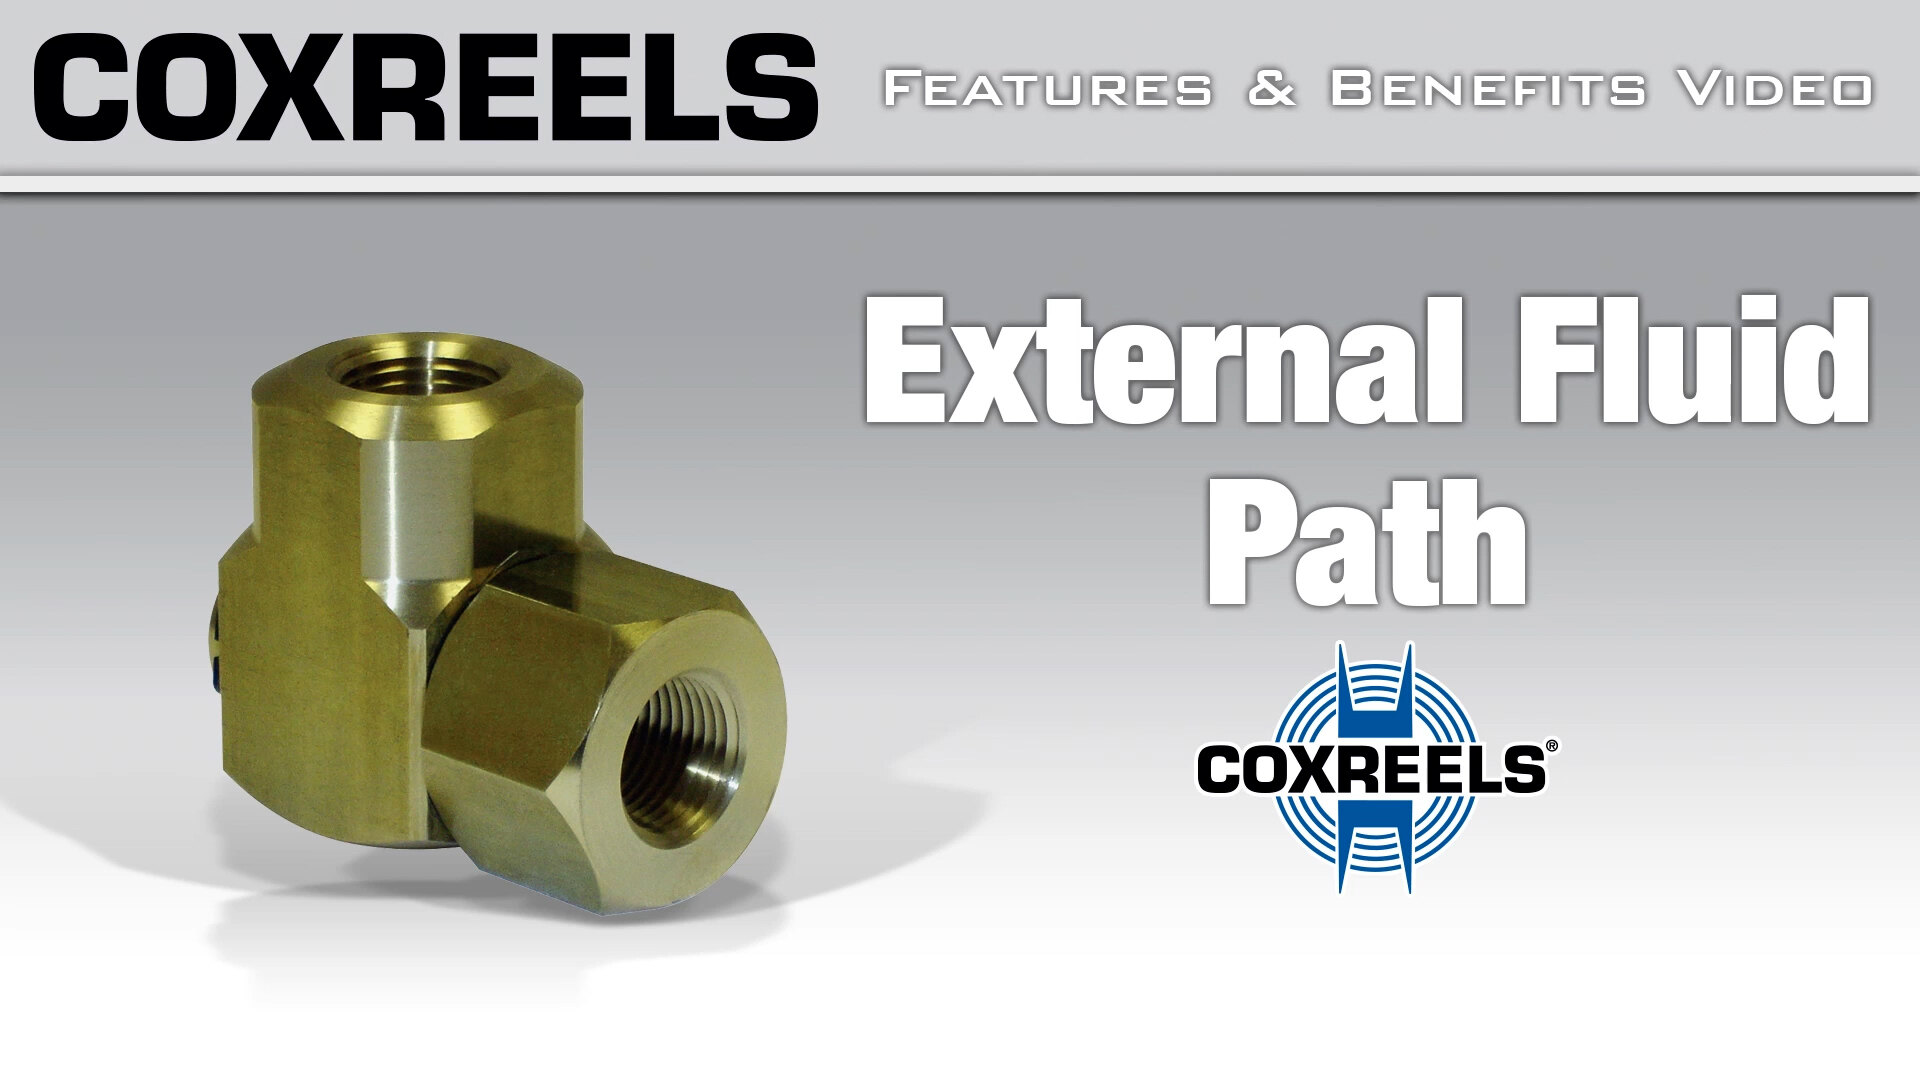 Coxreels Features & Benefits - External Fluid Path Video